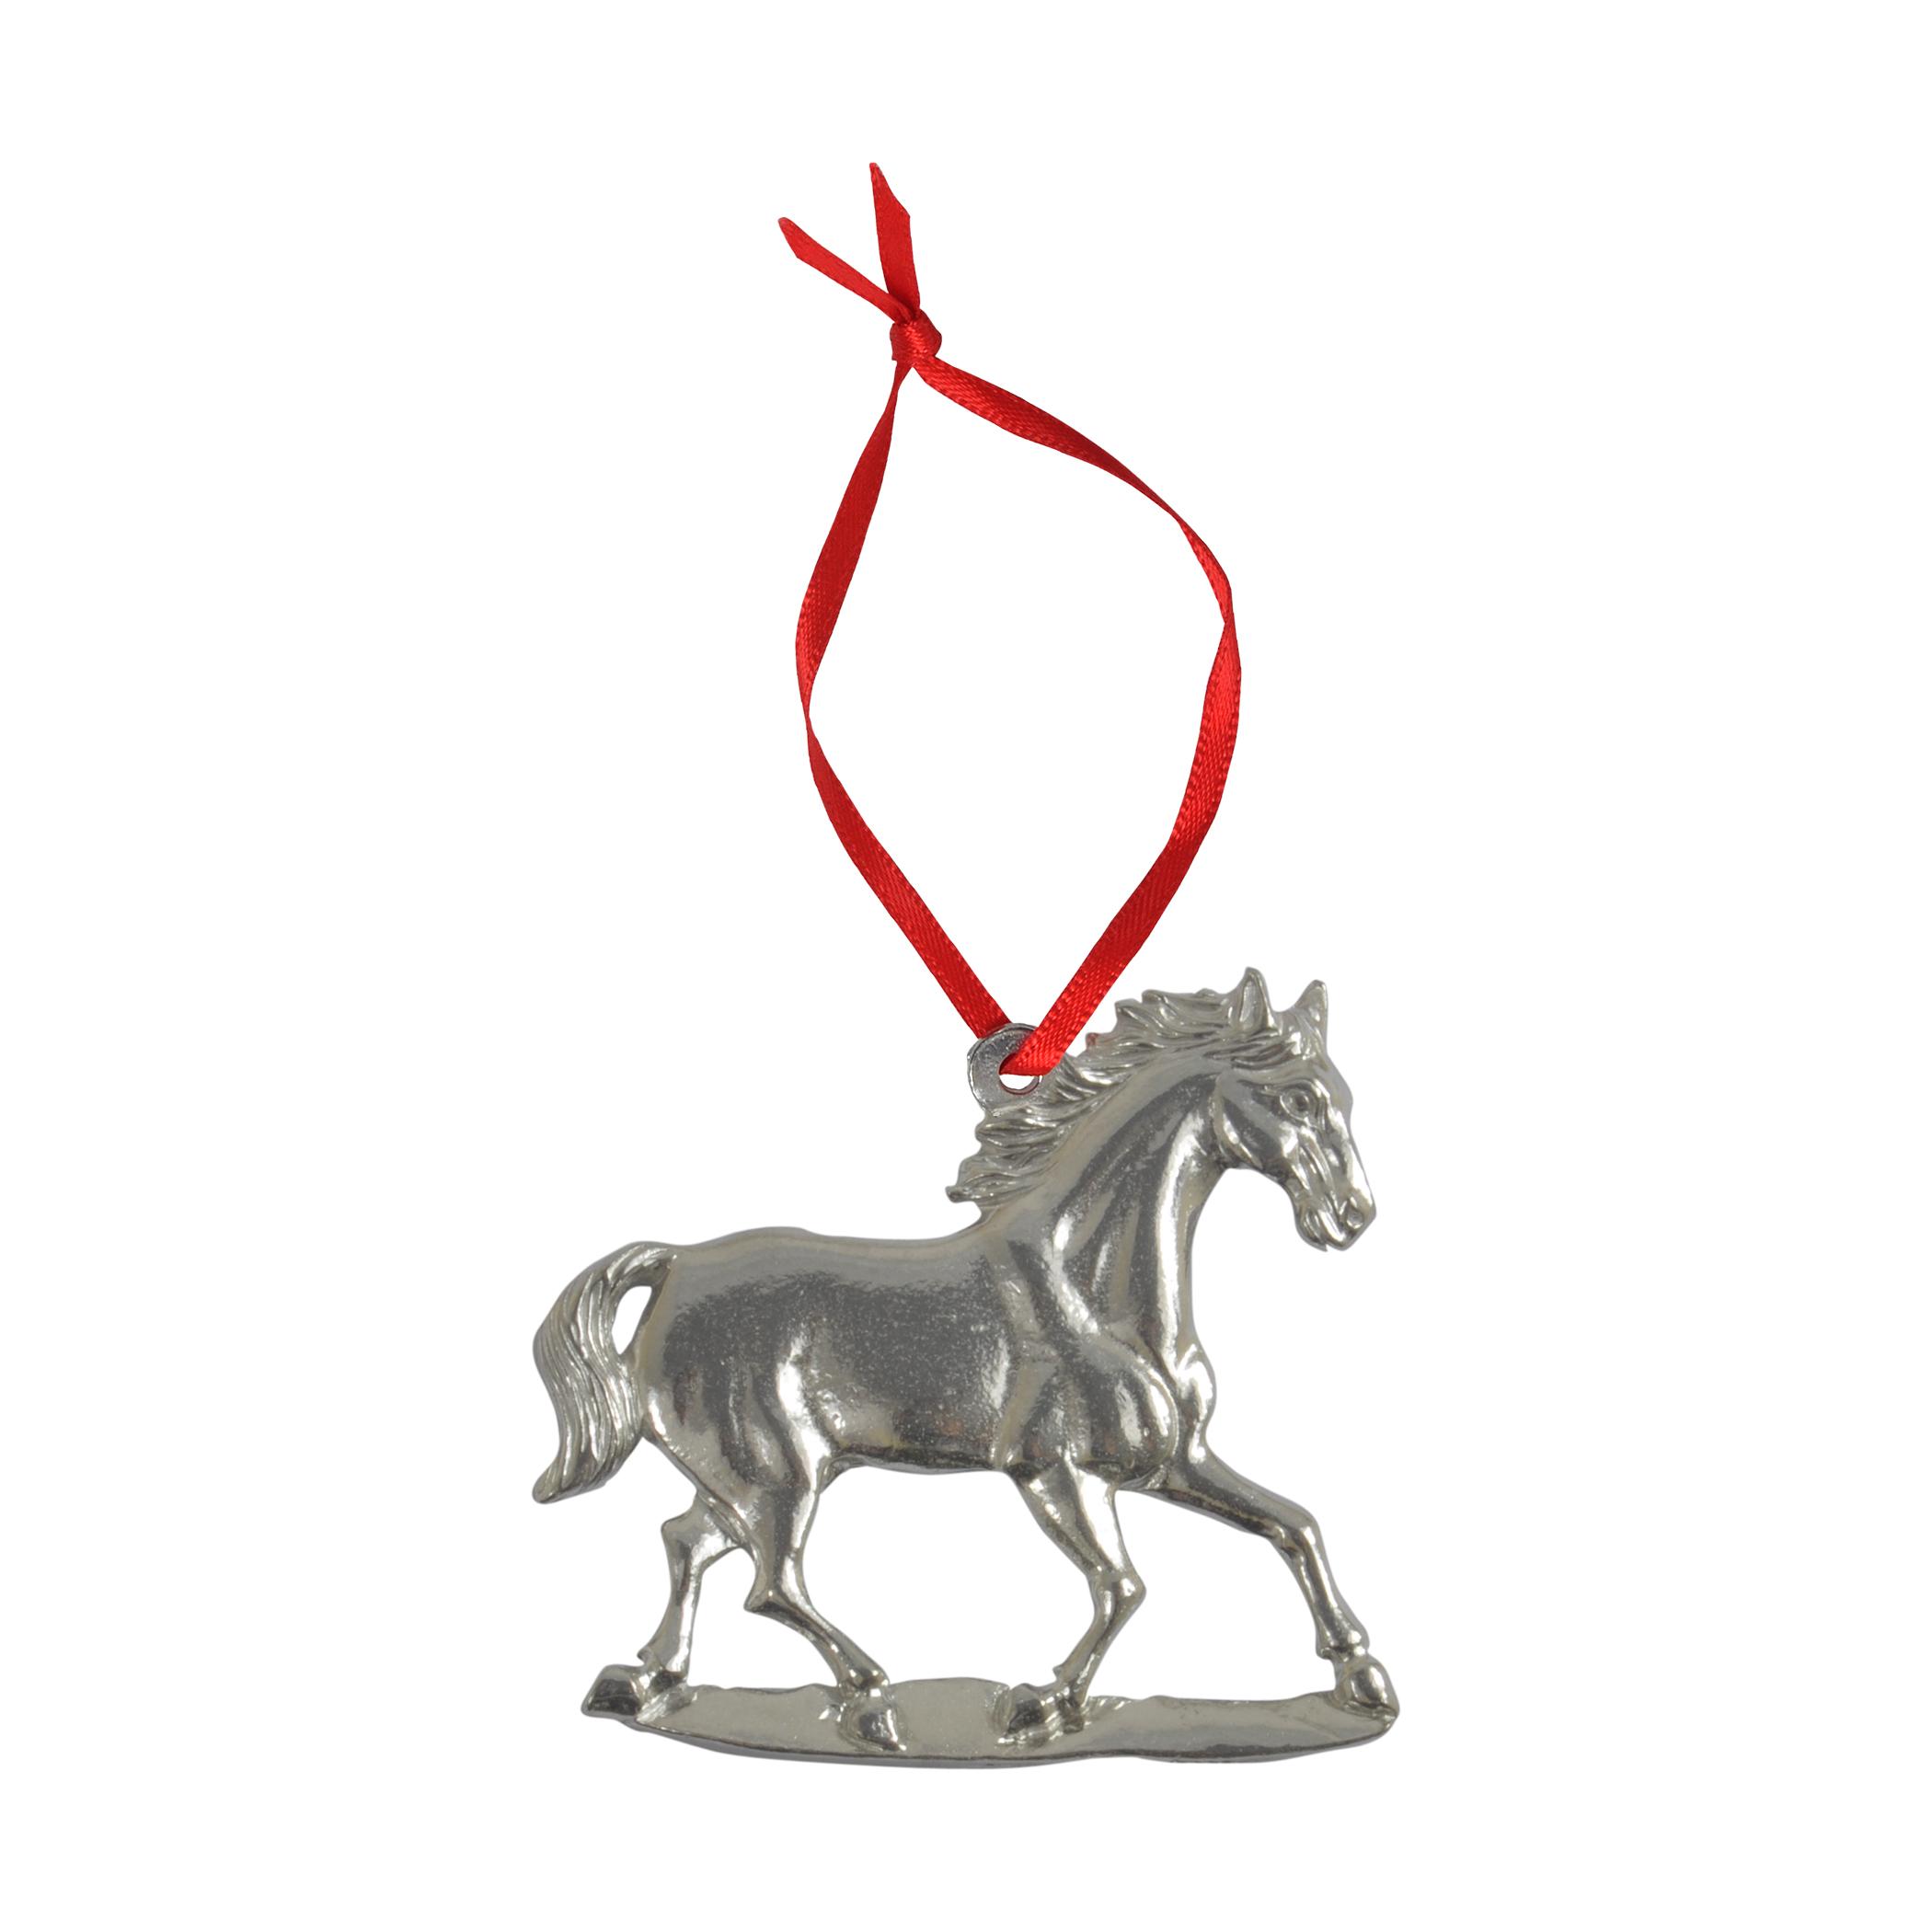  Running Horse Pewter Ornament